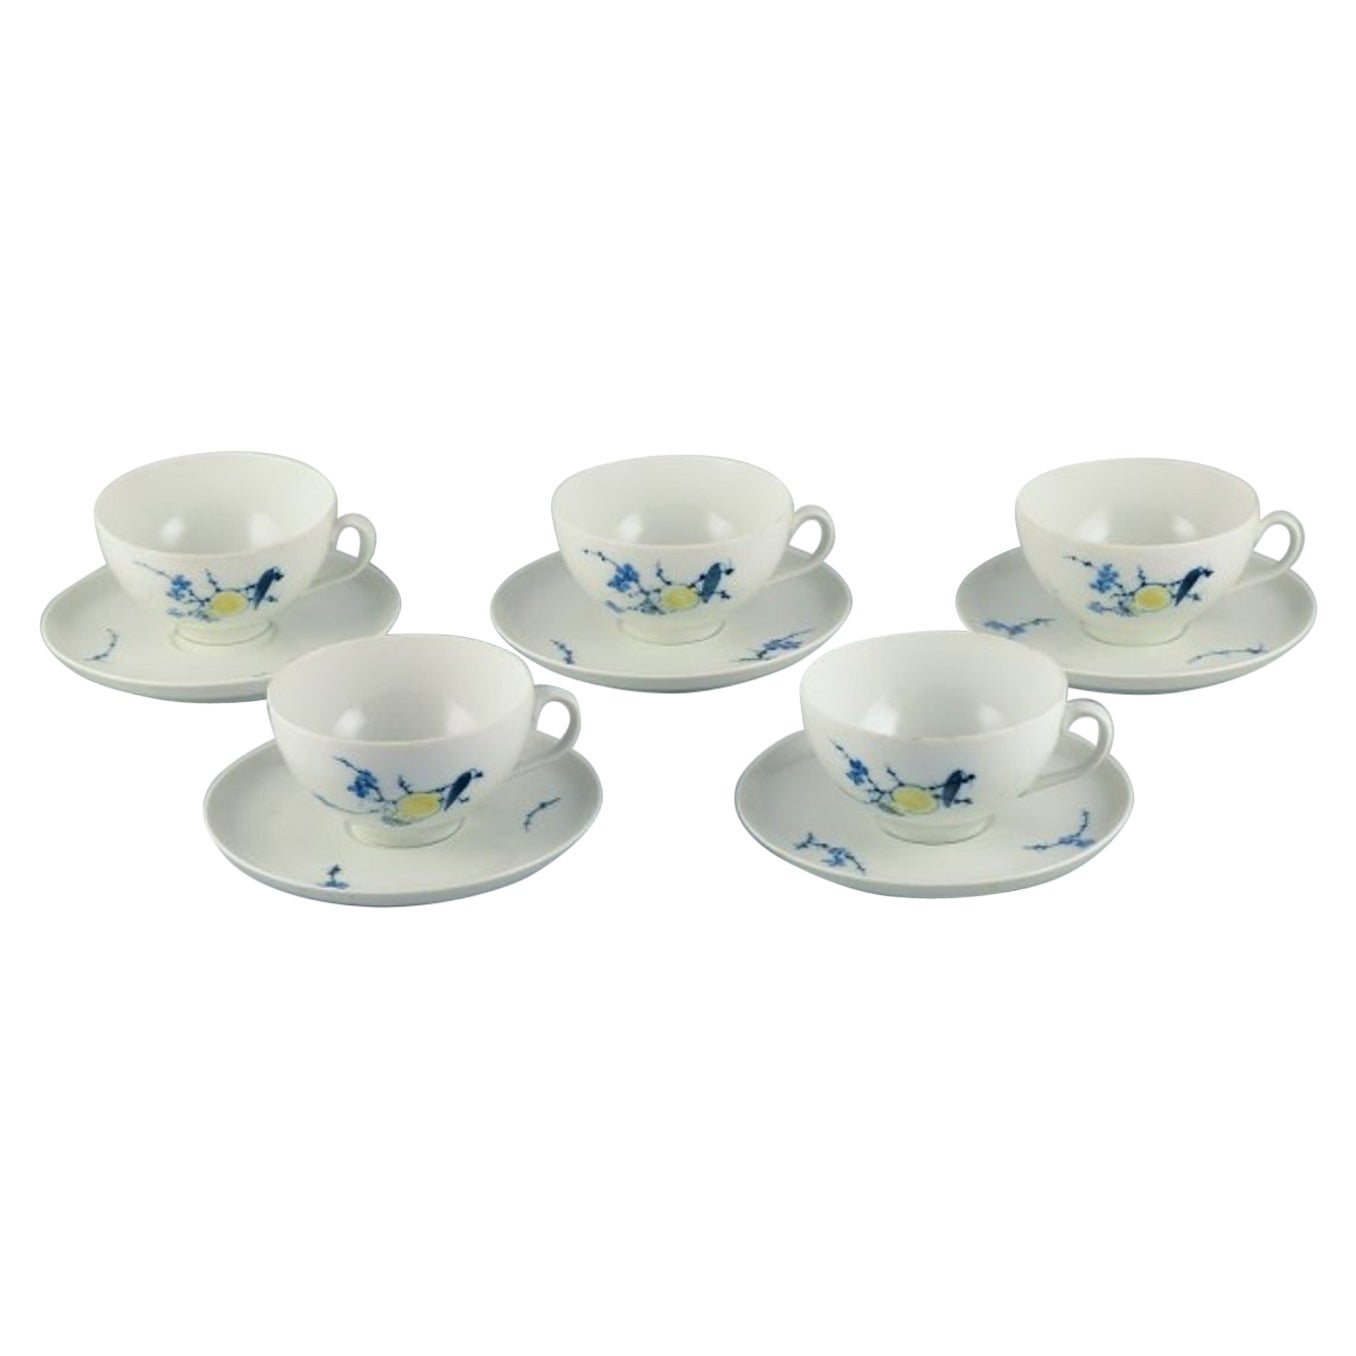 Johannes Hedegaard for Royal Copenhagen, Denmark, Rimmon, five-person tea set For Sale